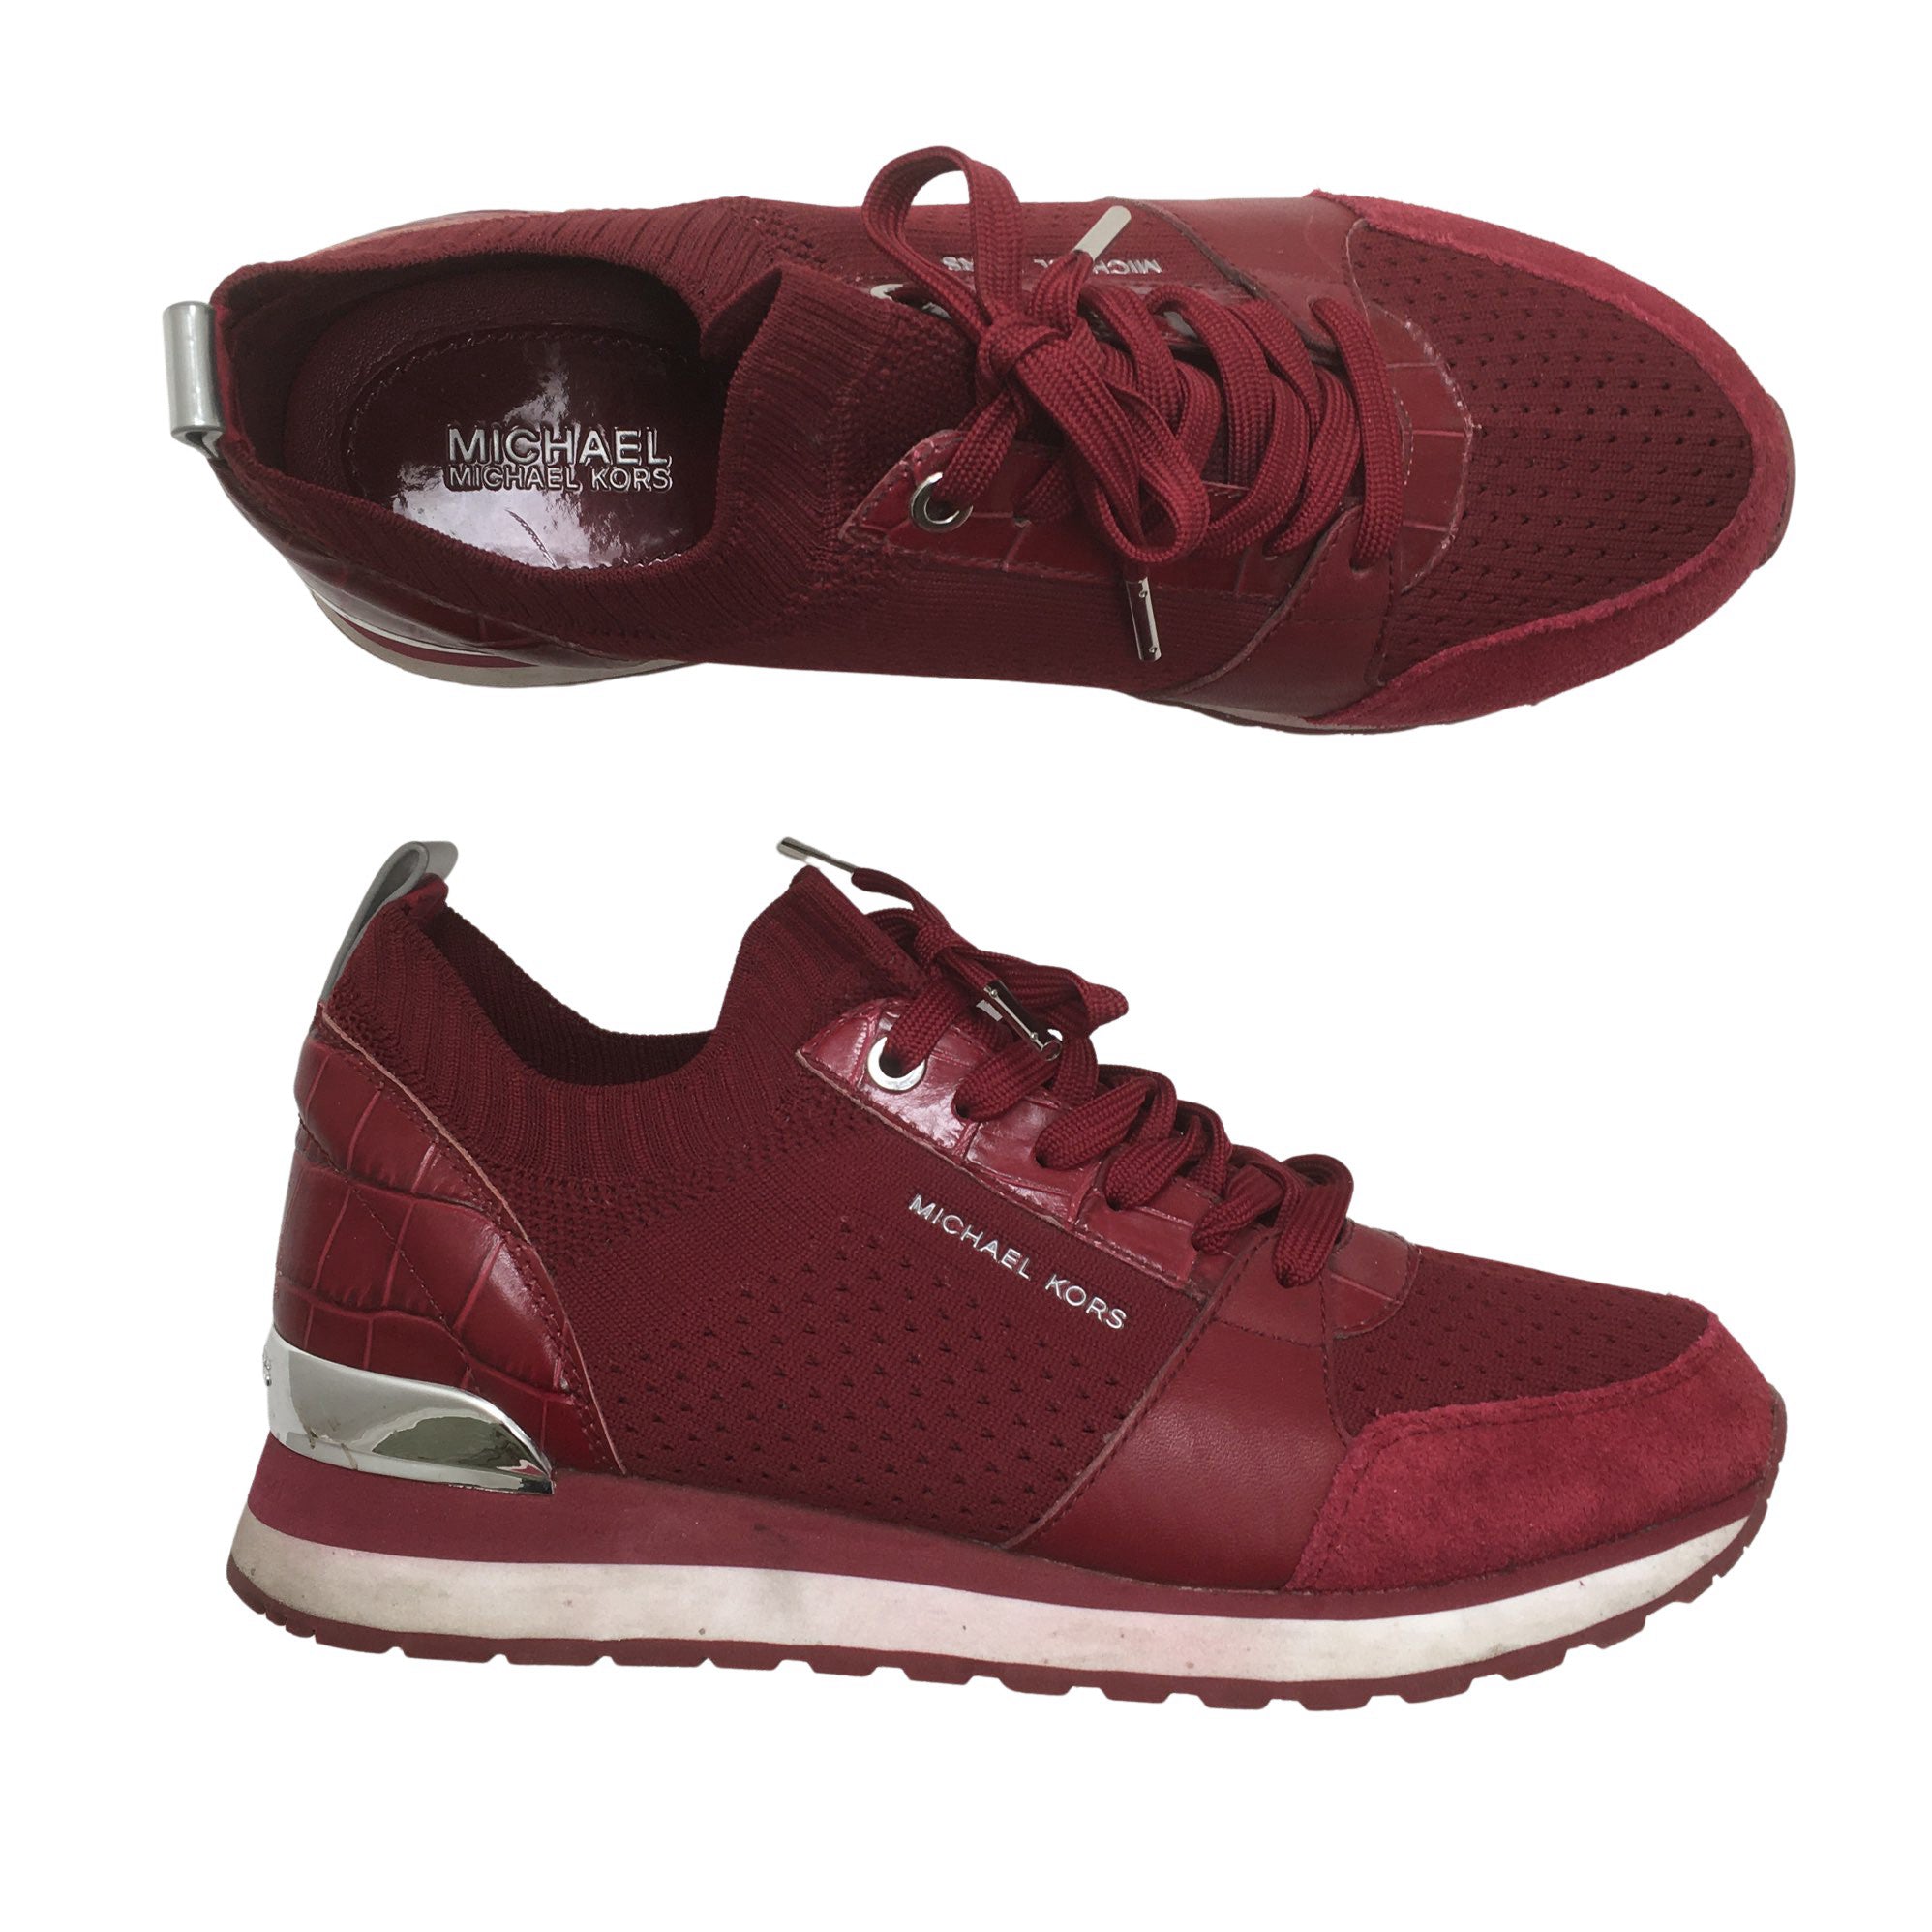 Women's Michael Kors Sneakers, size 37 (Burgundy) | Emmy